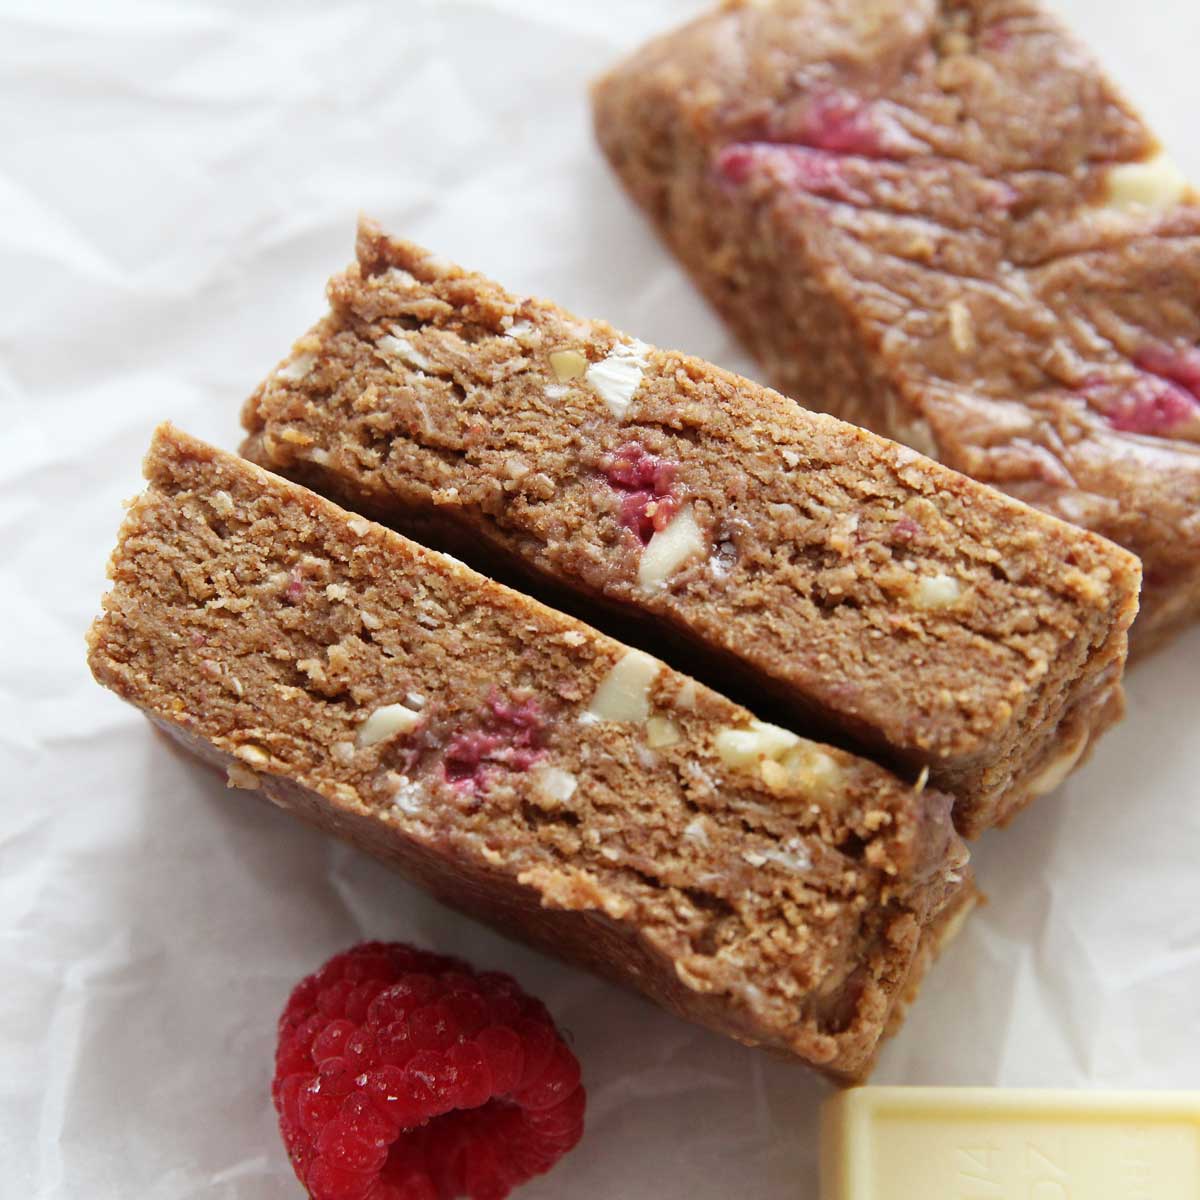 Healthy White Chocolate Raspberry Protein Bars Recipe (Tastes Like Quest Bars!) - Almond Joy Protein Bars